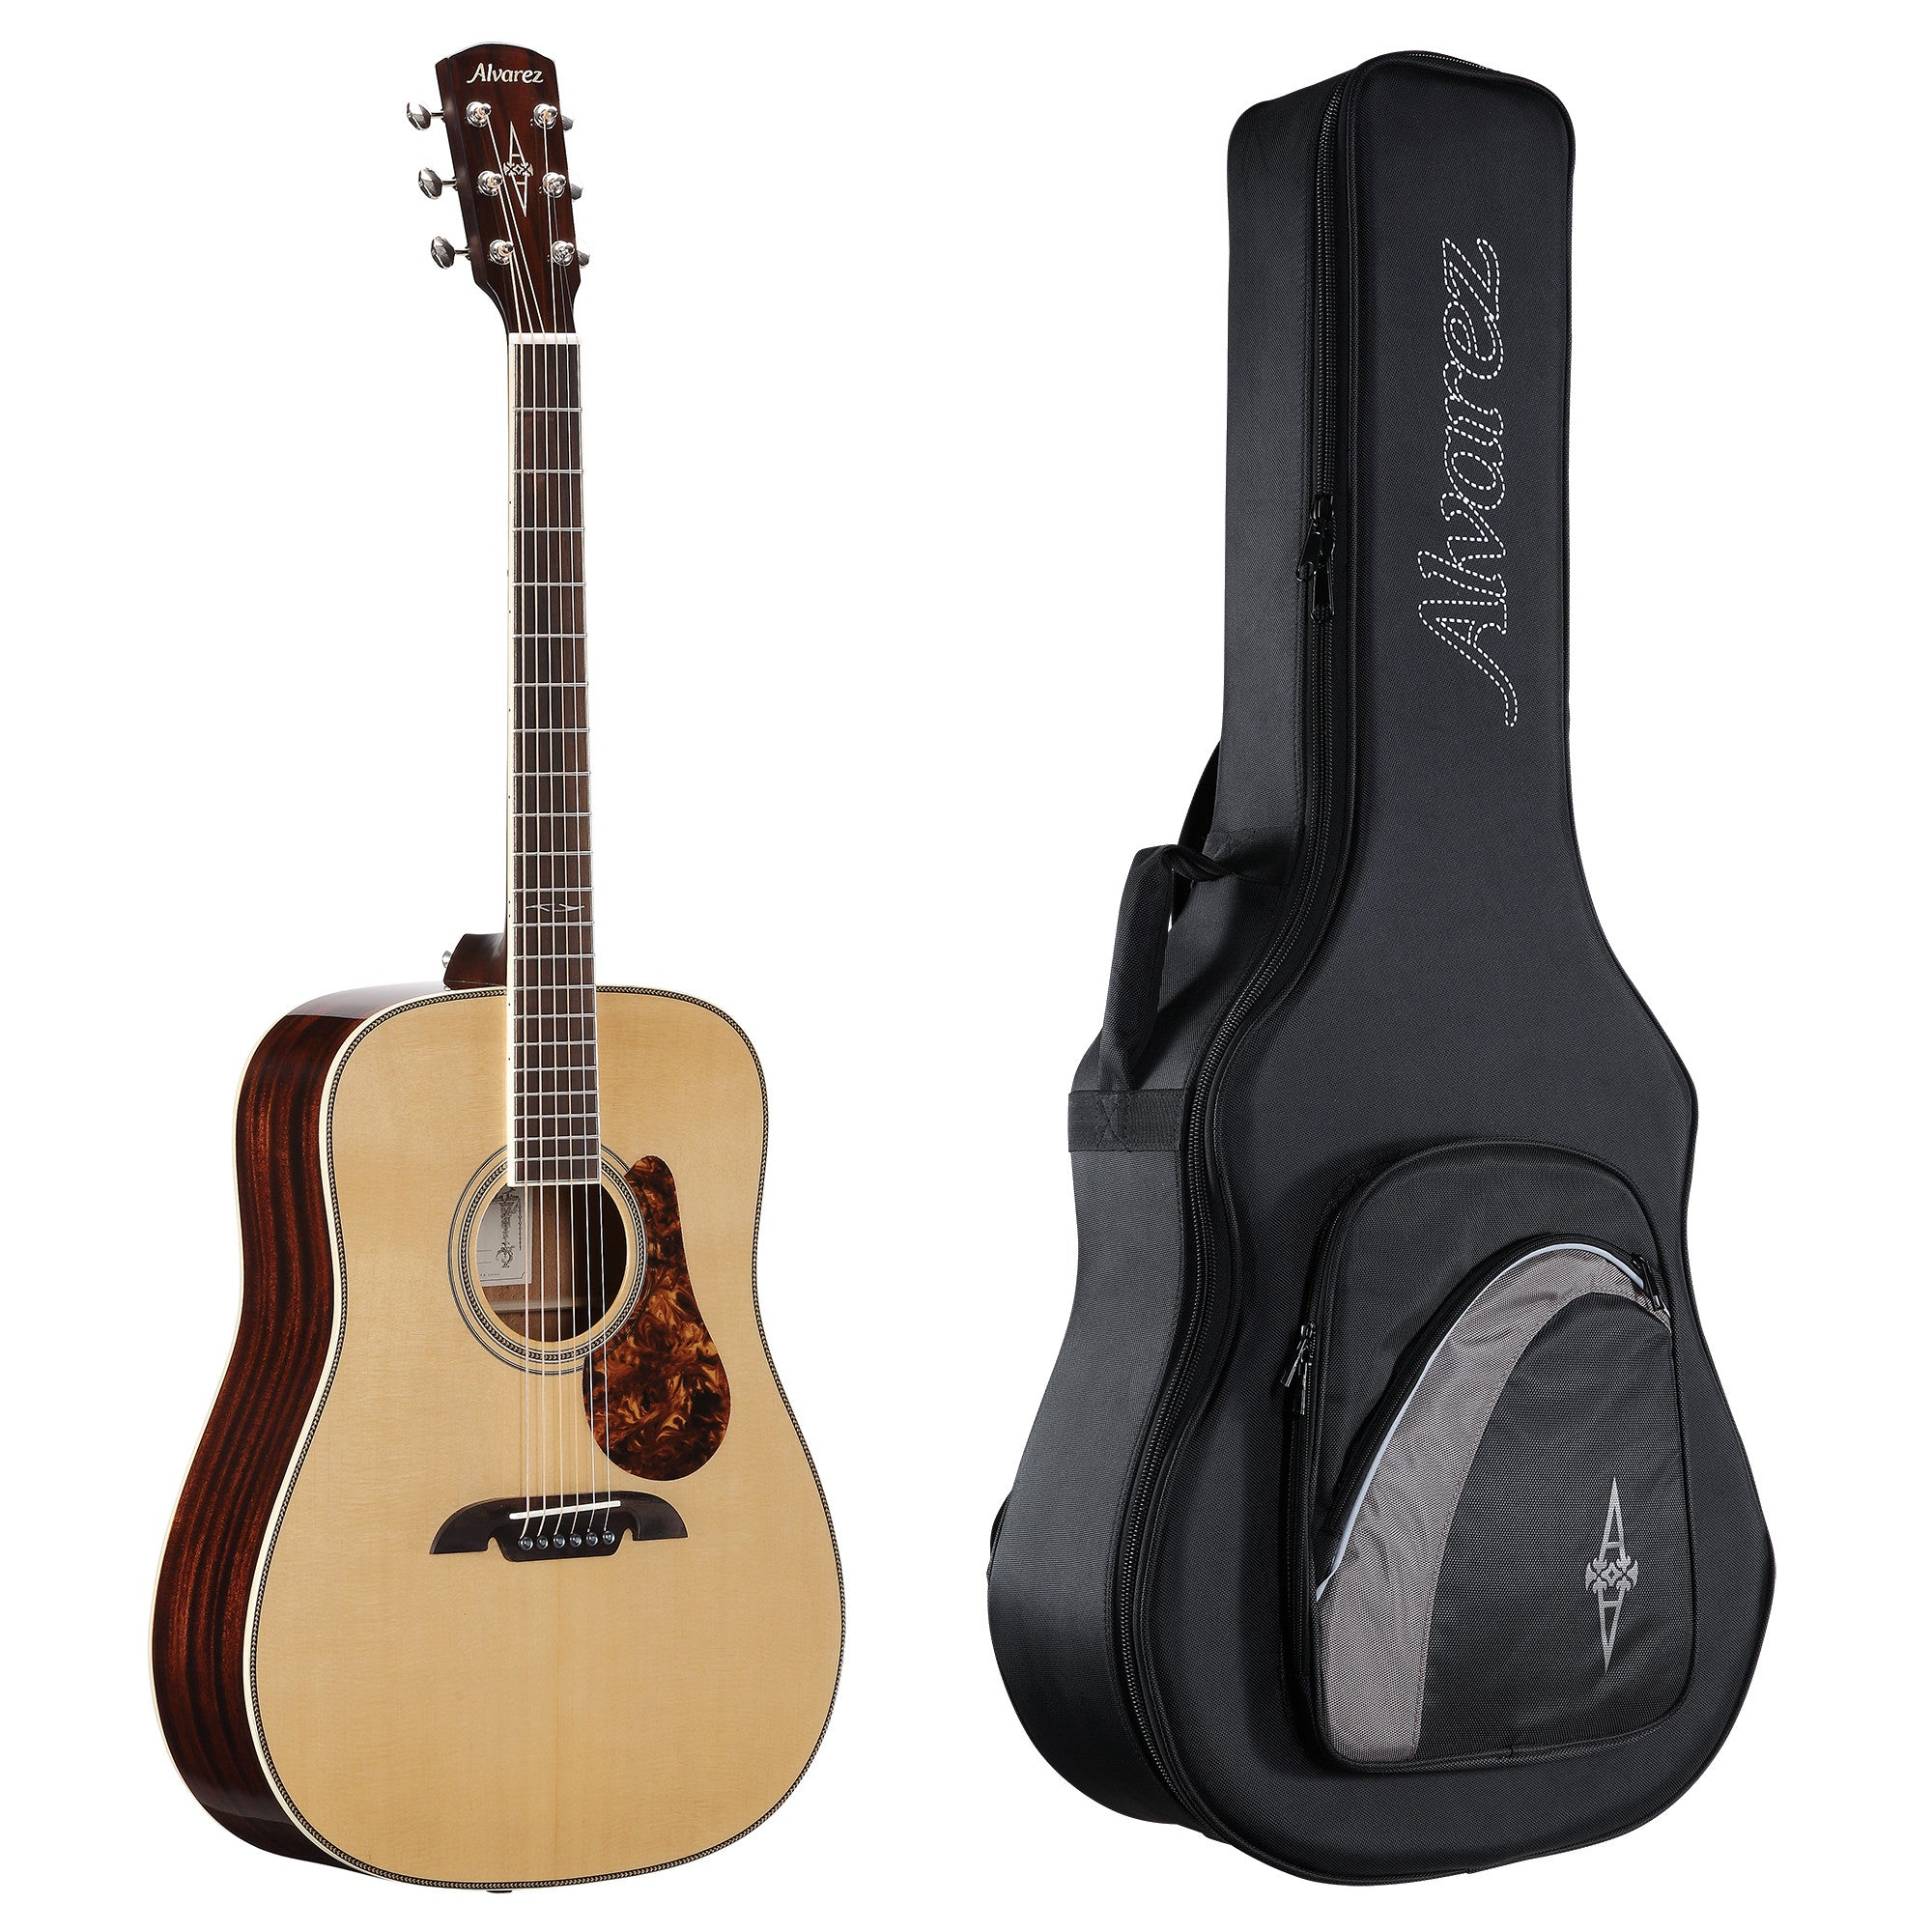 Alvarez Masterworks MD60EBG Acoustic Electric Guitar with Case